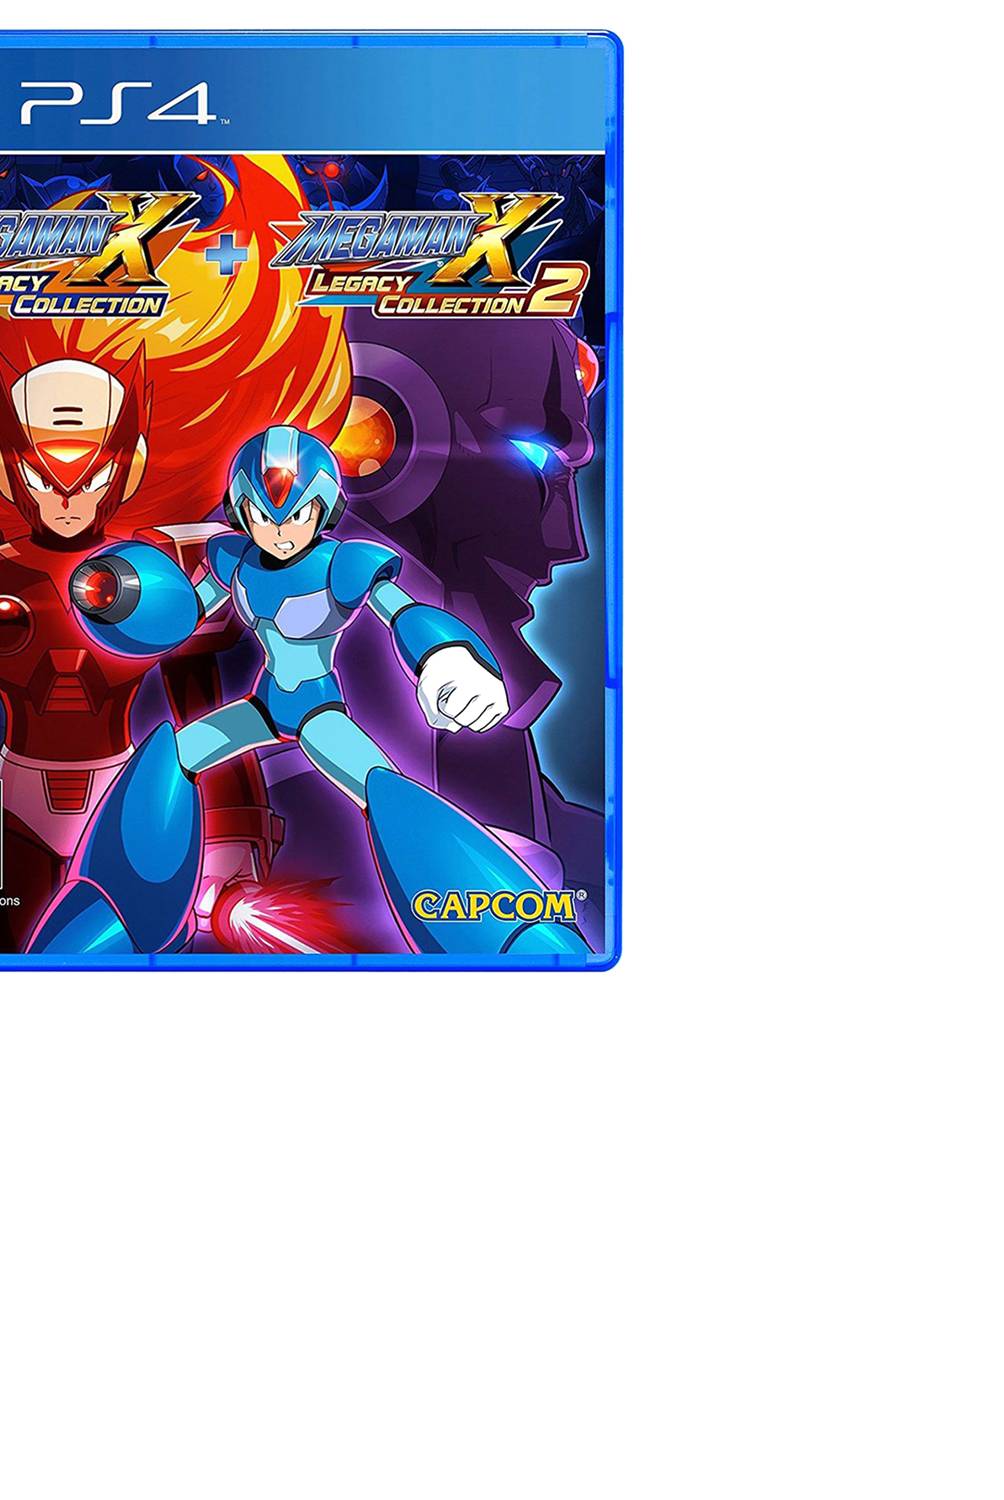 PLAYSTATION - Mega Man X Legacy Collection 1 + 2 (PS4)